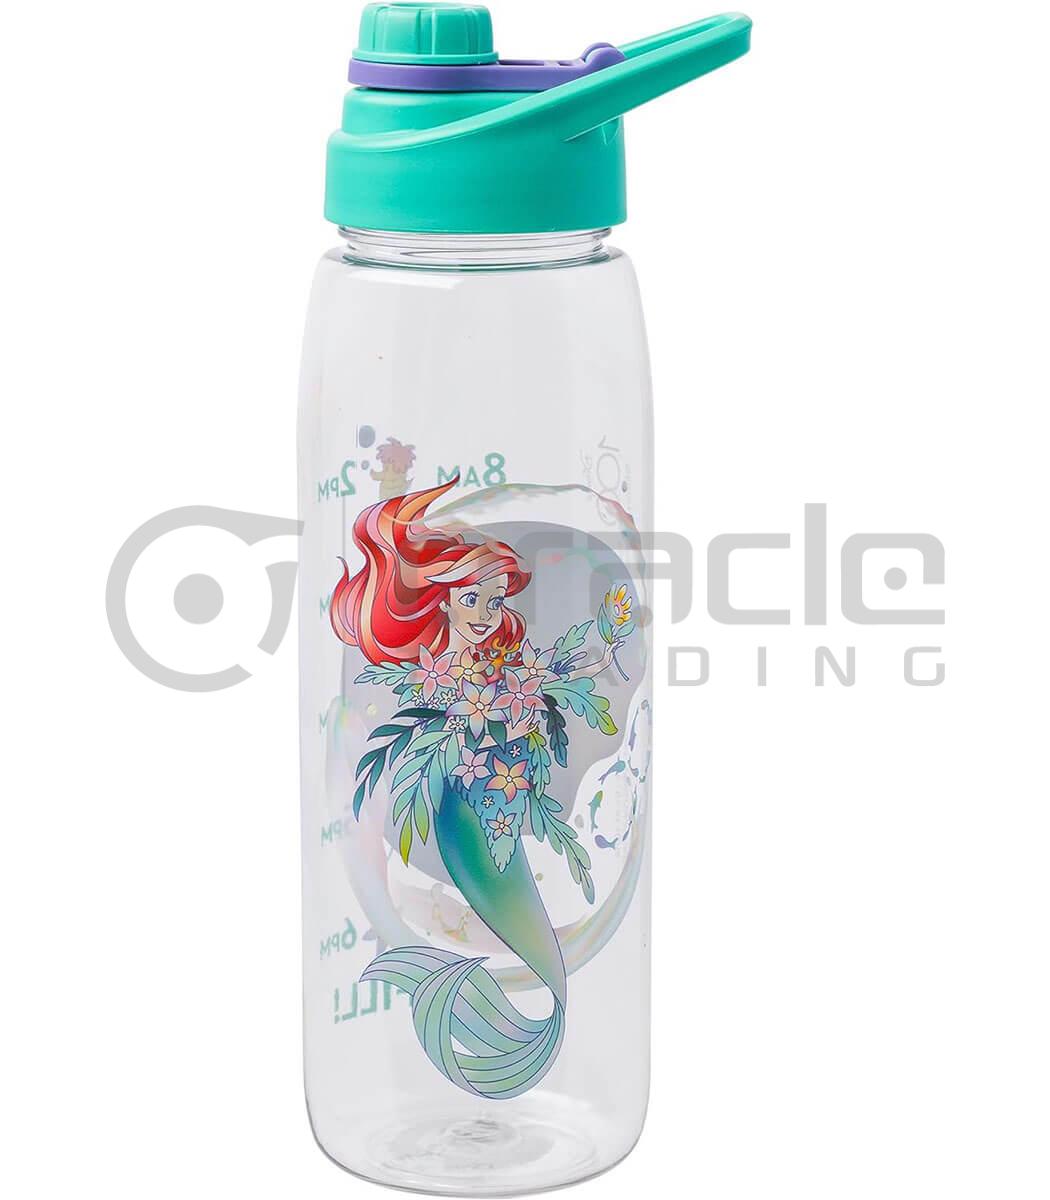 Ariel Water Bottle (Disney Princess)